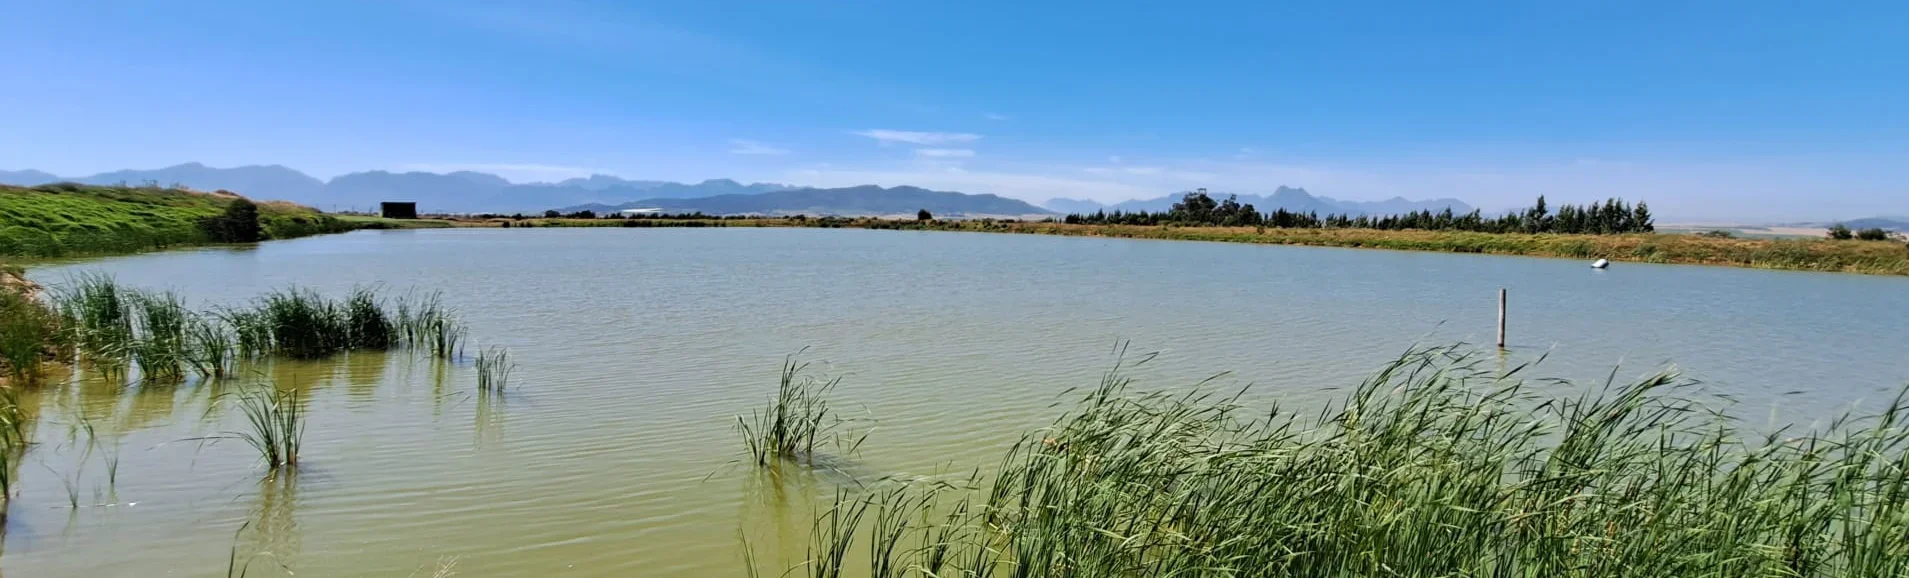 Zuid Afrika waterverhaal header